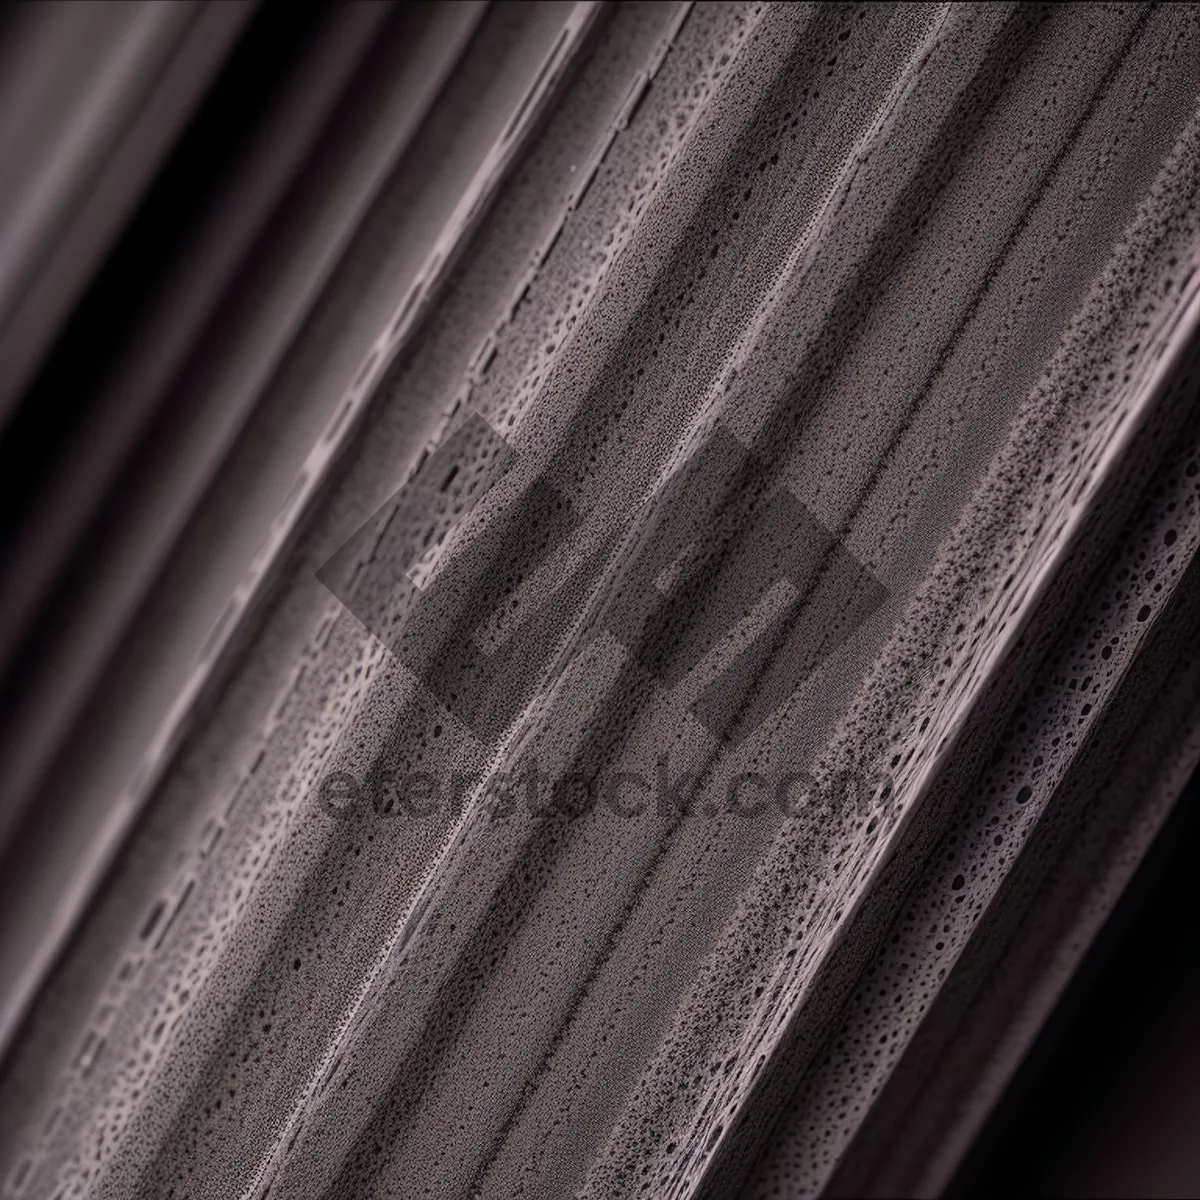 Picture of Metallic Filter Texture with Radiator Mechanism Design